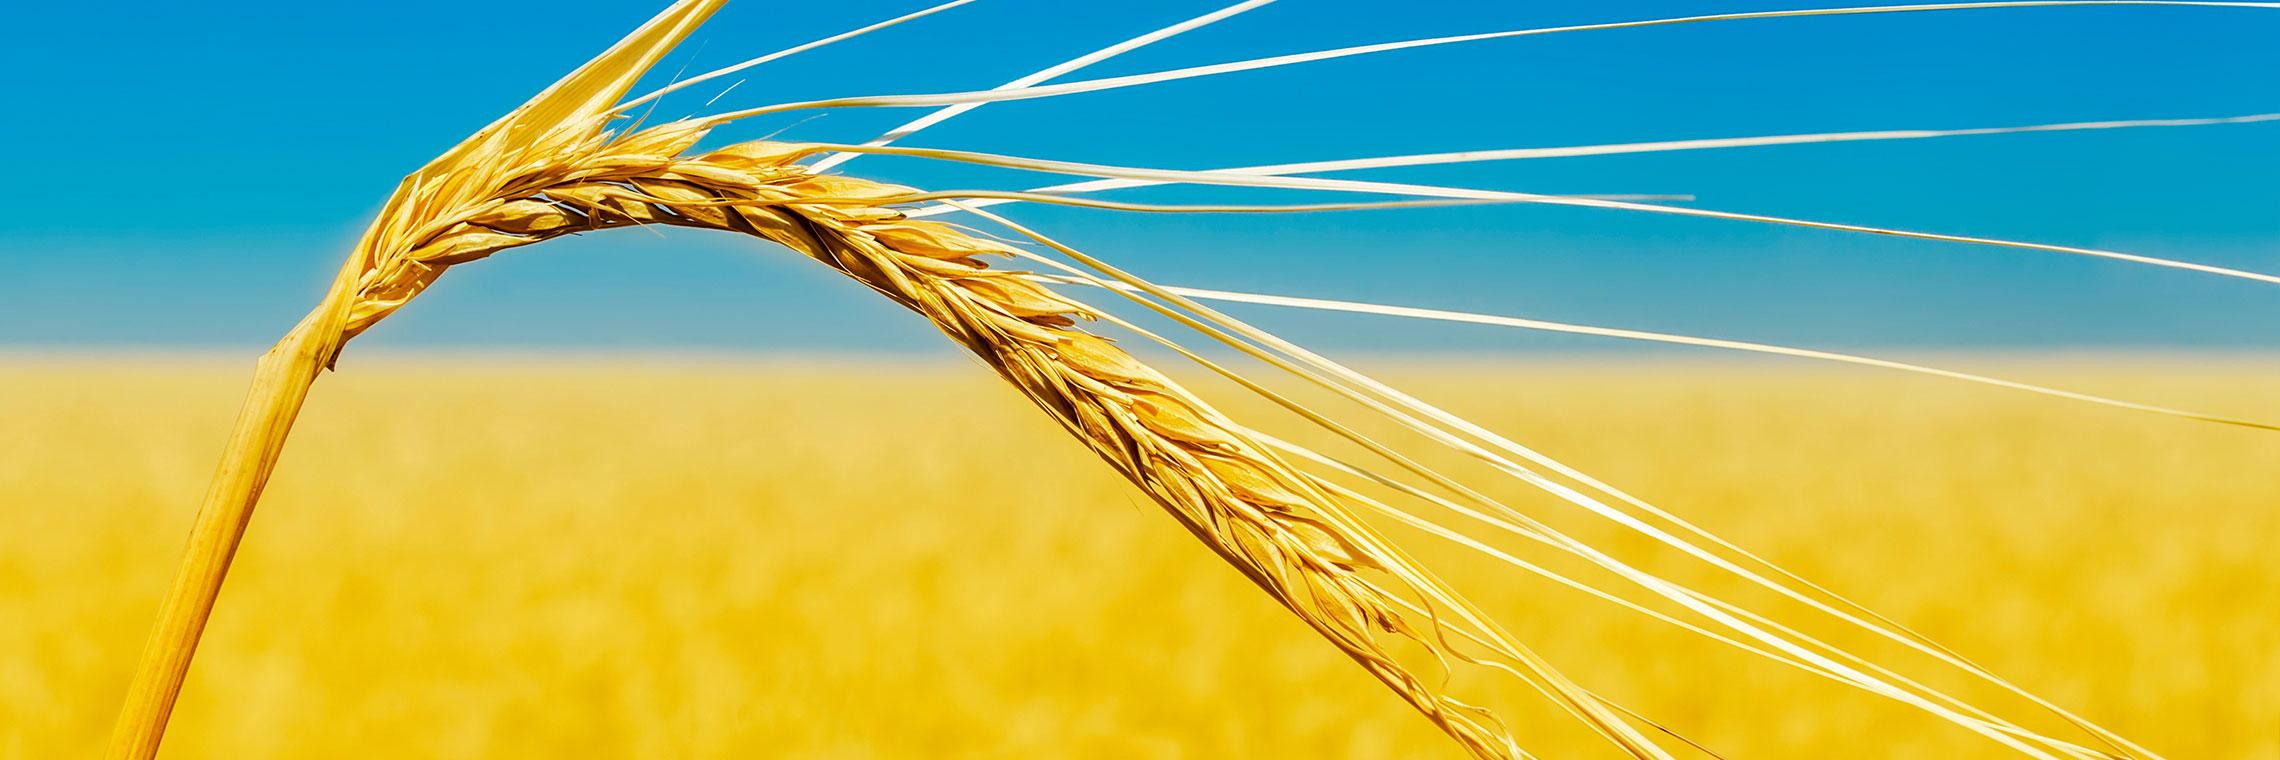 Wheat ear close up and yellow field with blue sky like Ukrainian flag